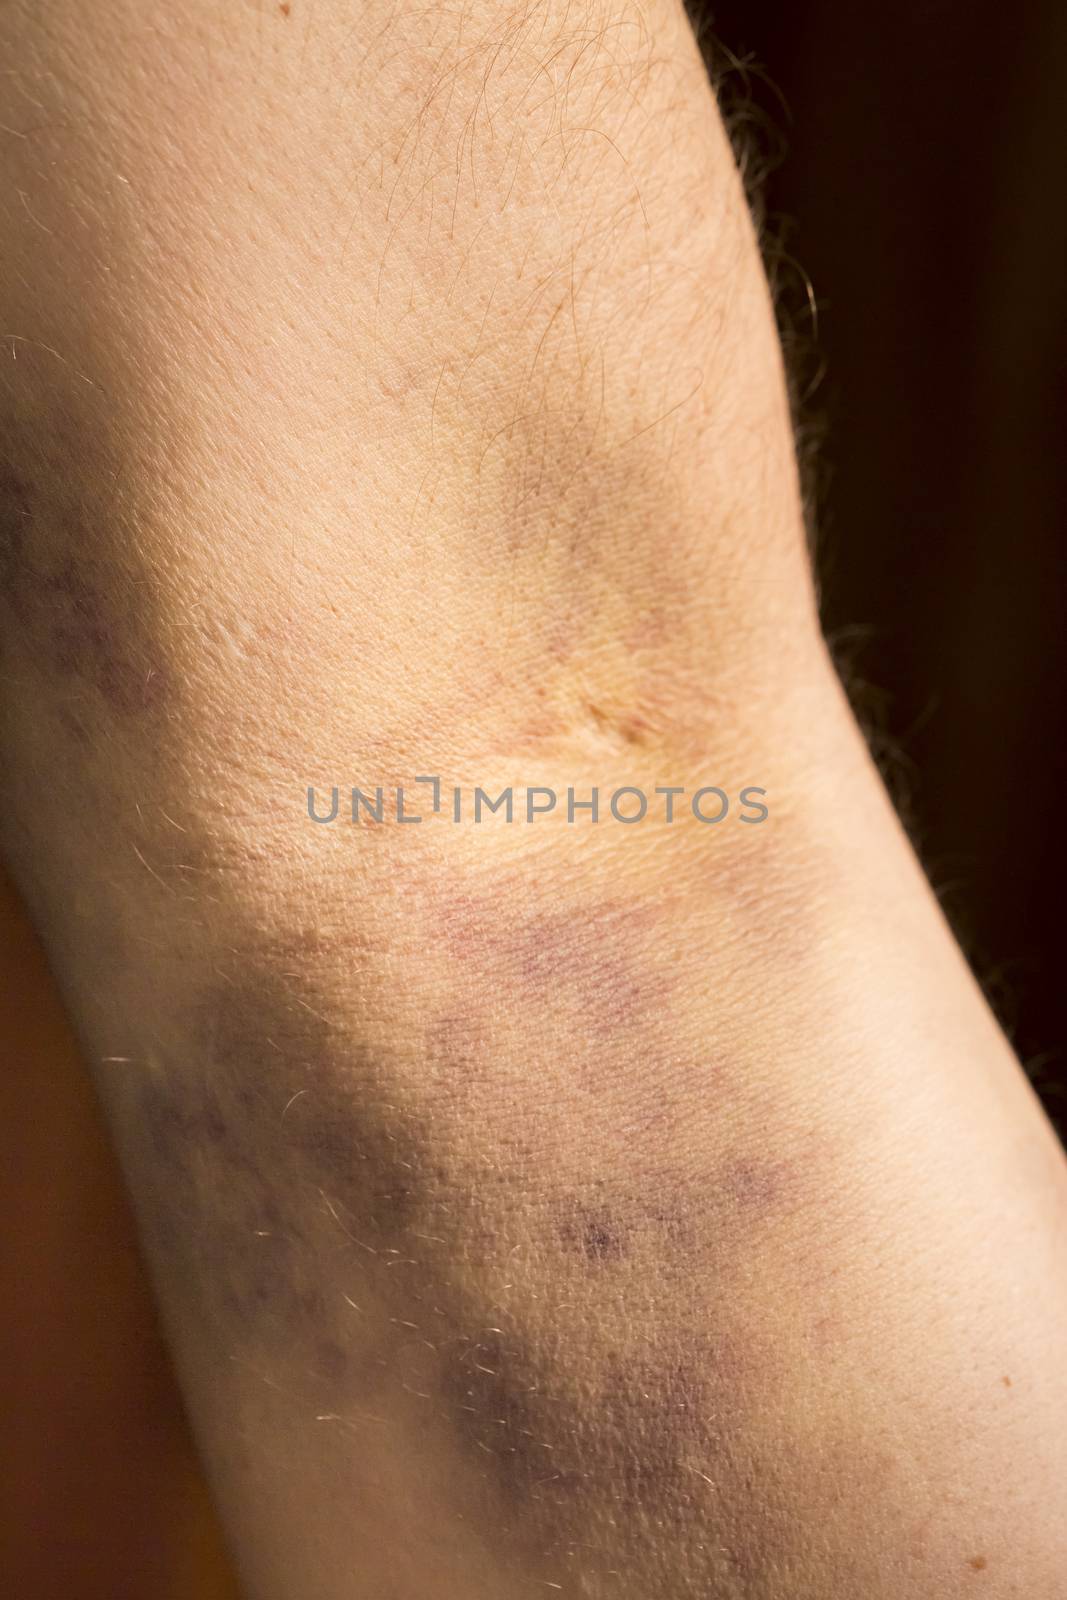 large hematoma on human arm after blood test black background